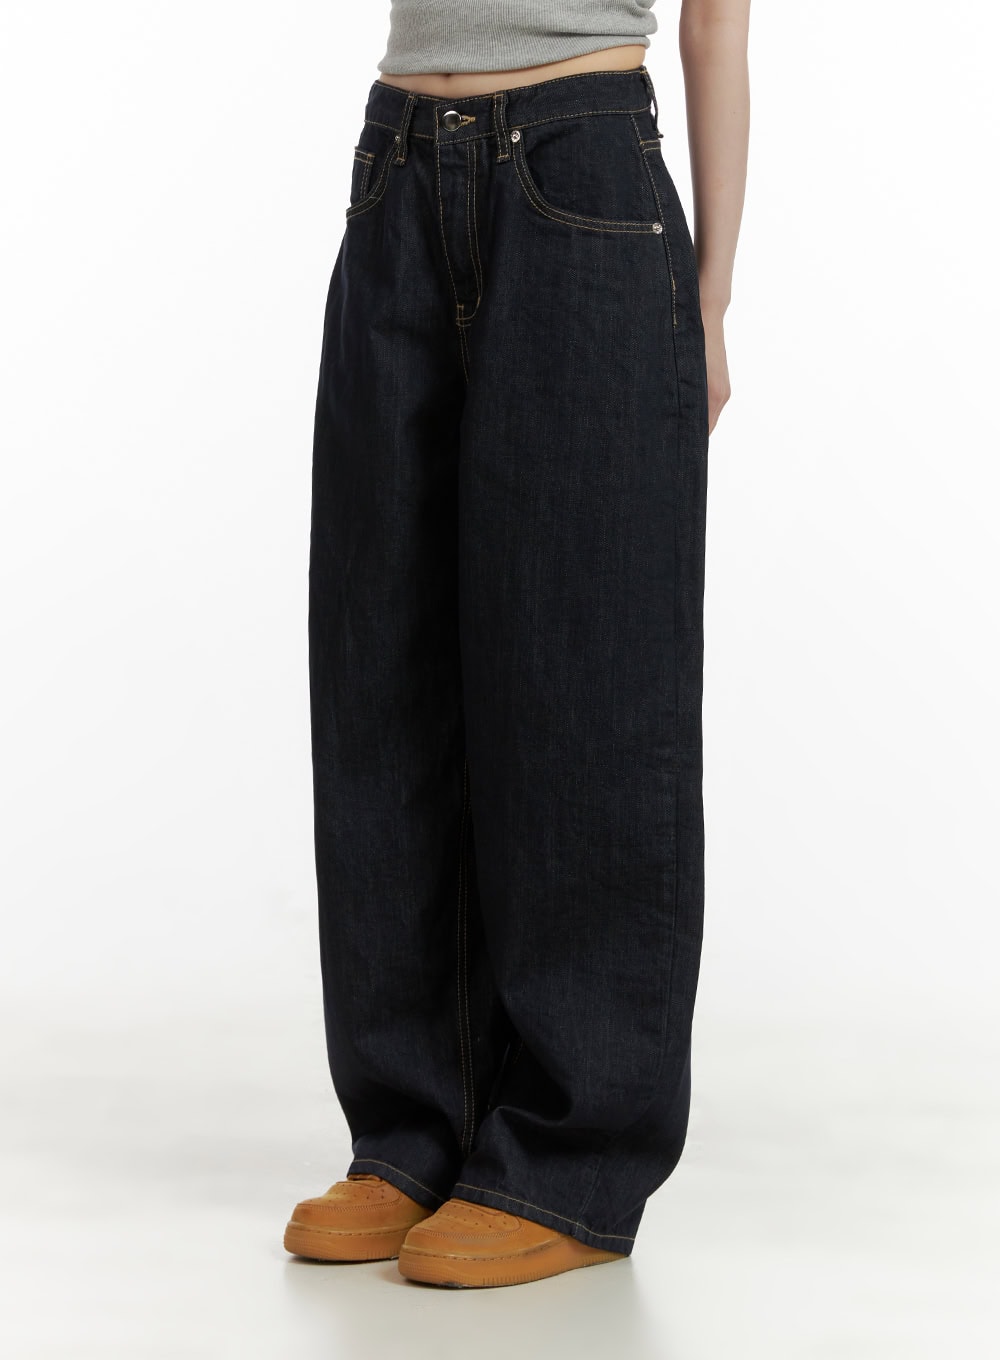 stitch-detail-baggy-jeans-cu410